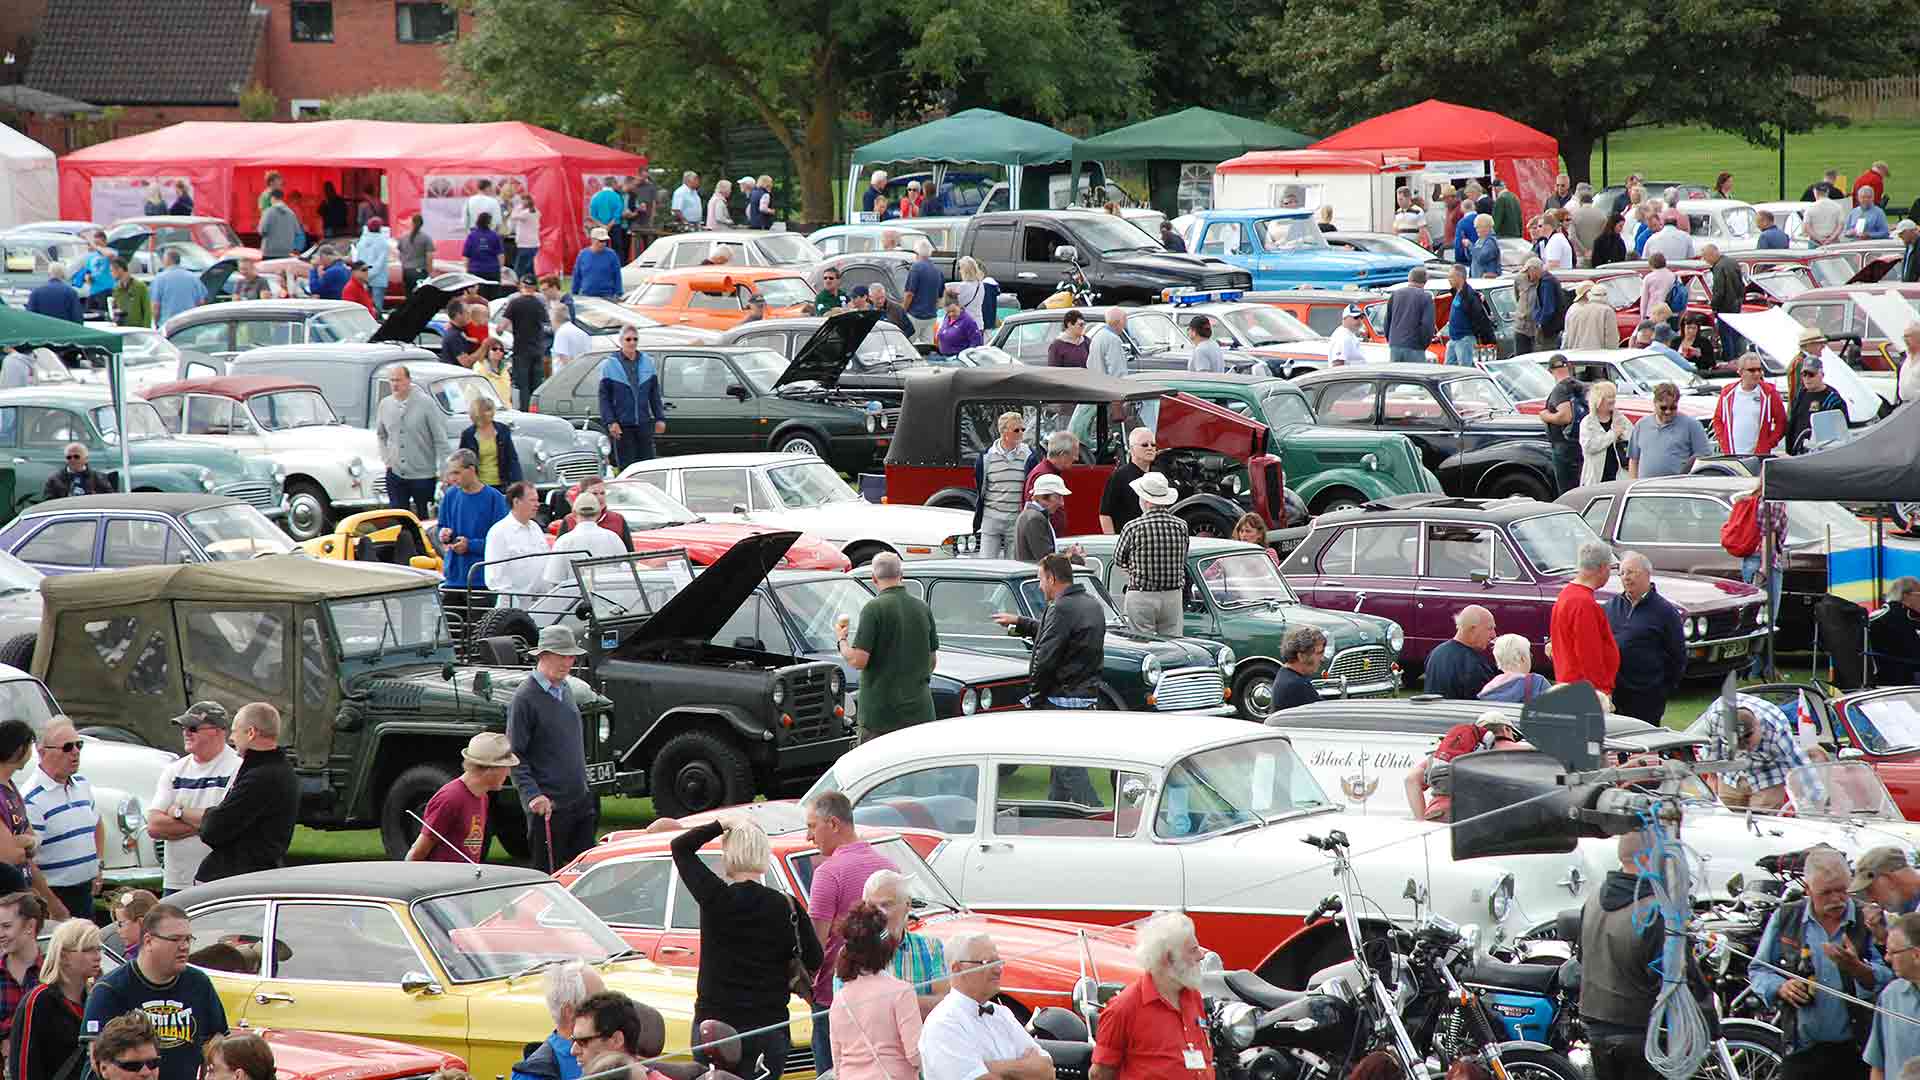 Tewkesbury Classic Vehicle Festival